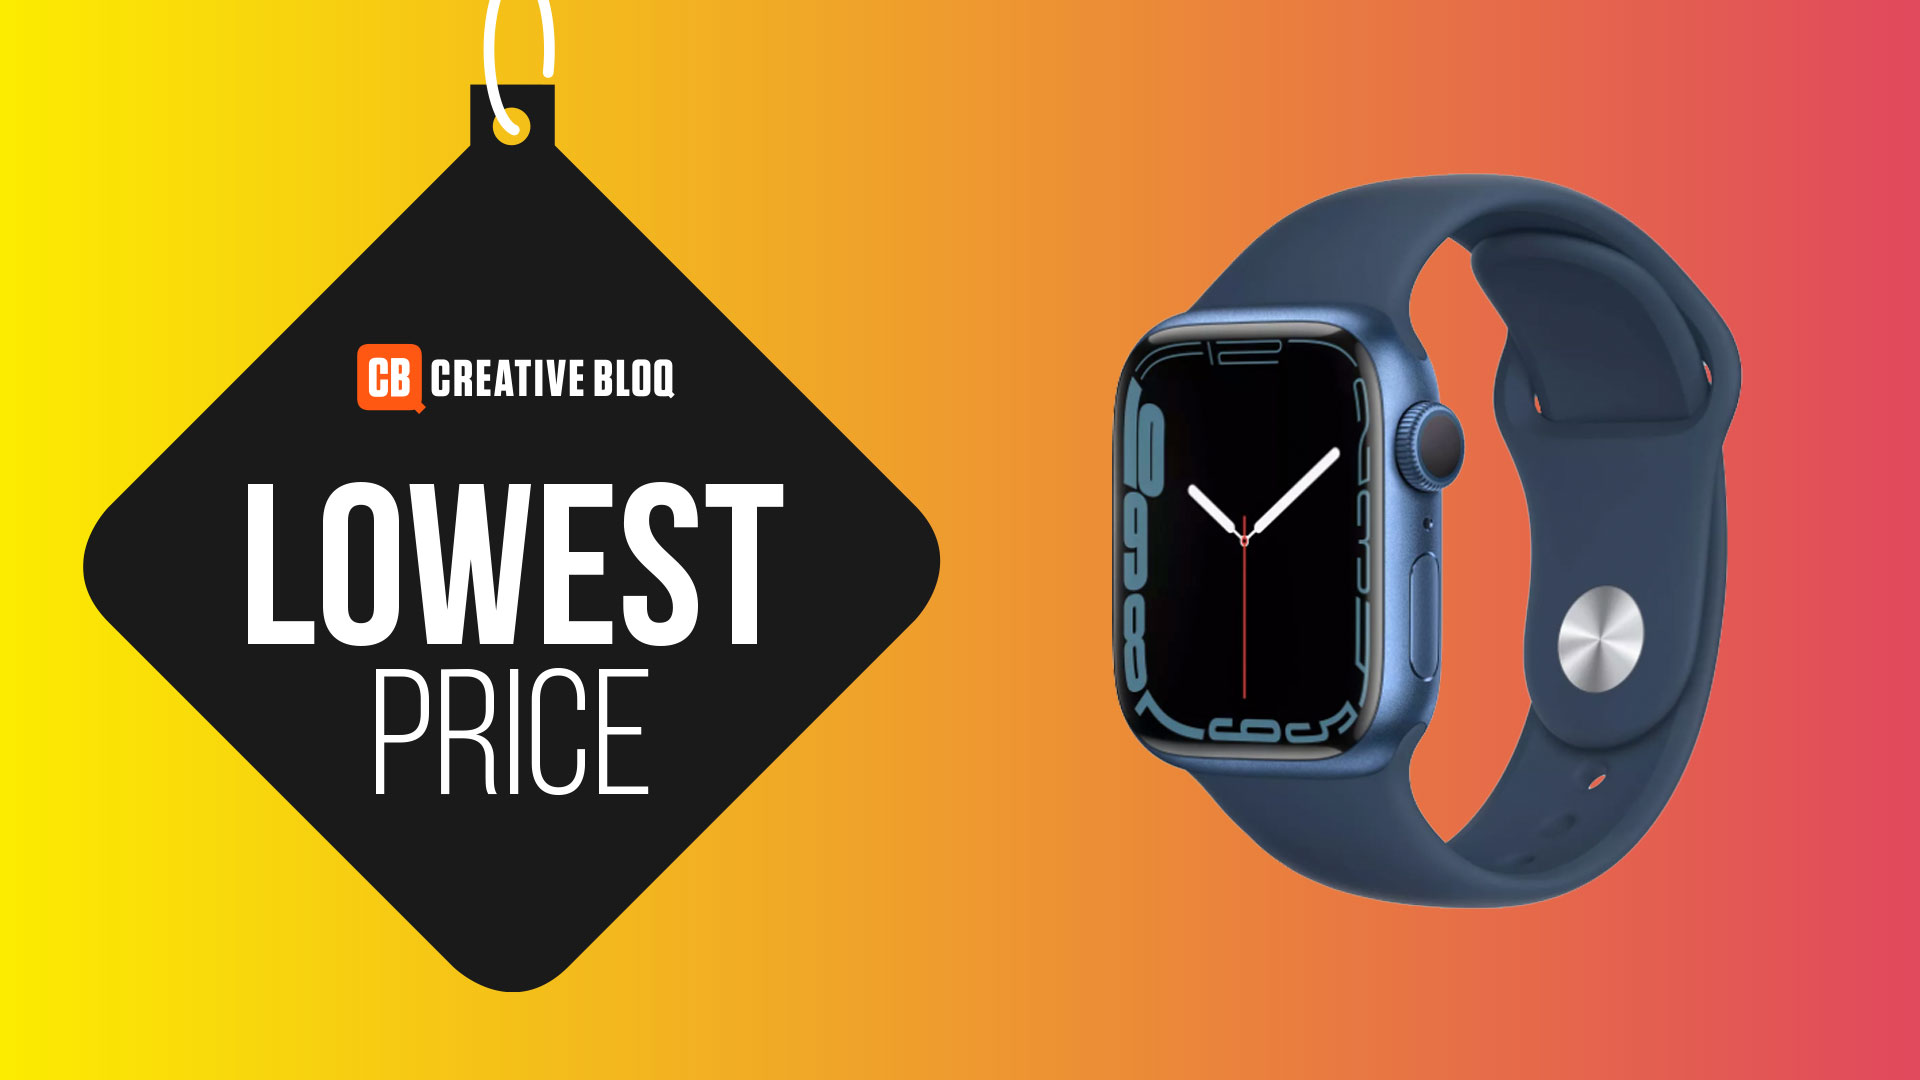 Apple watch series 7 price